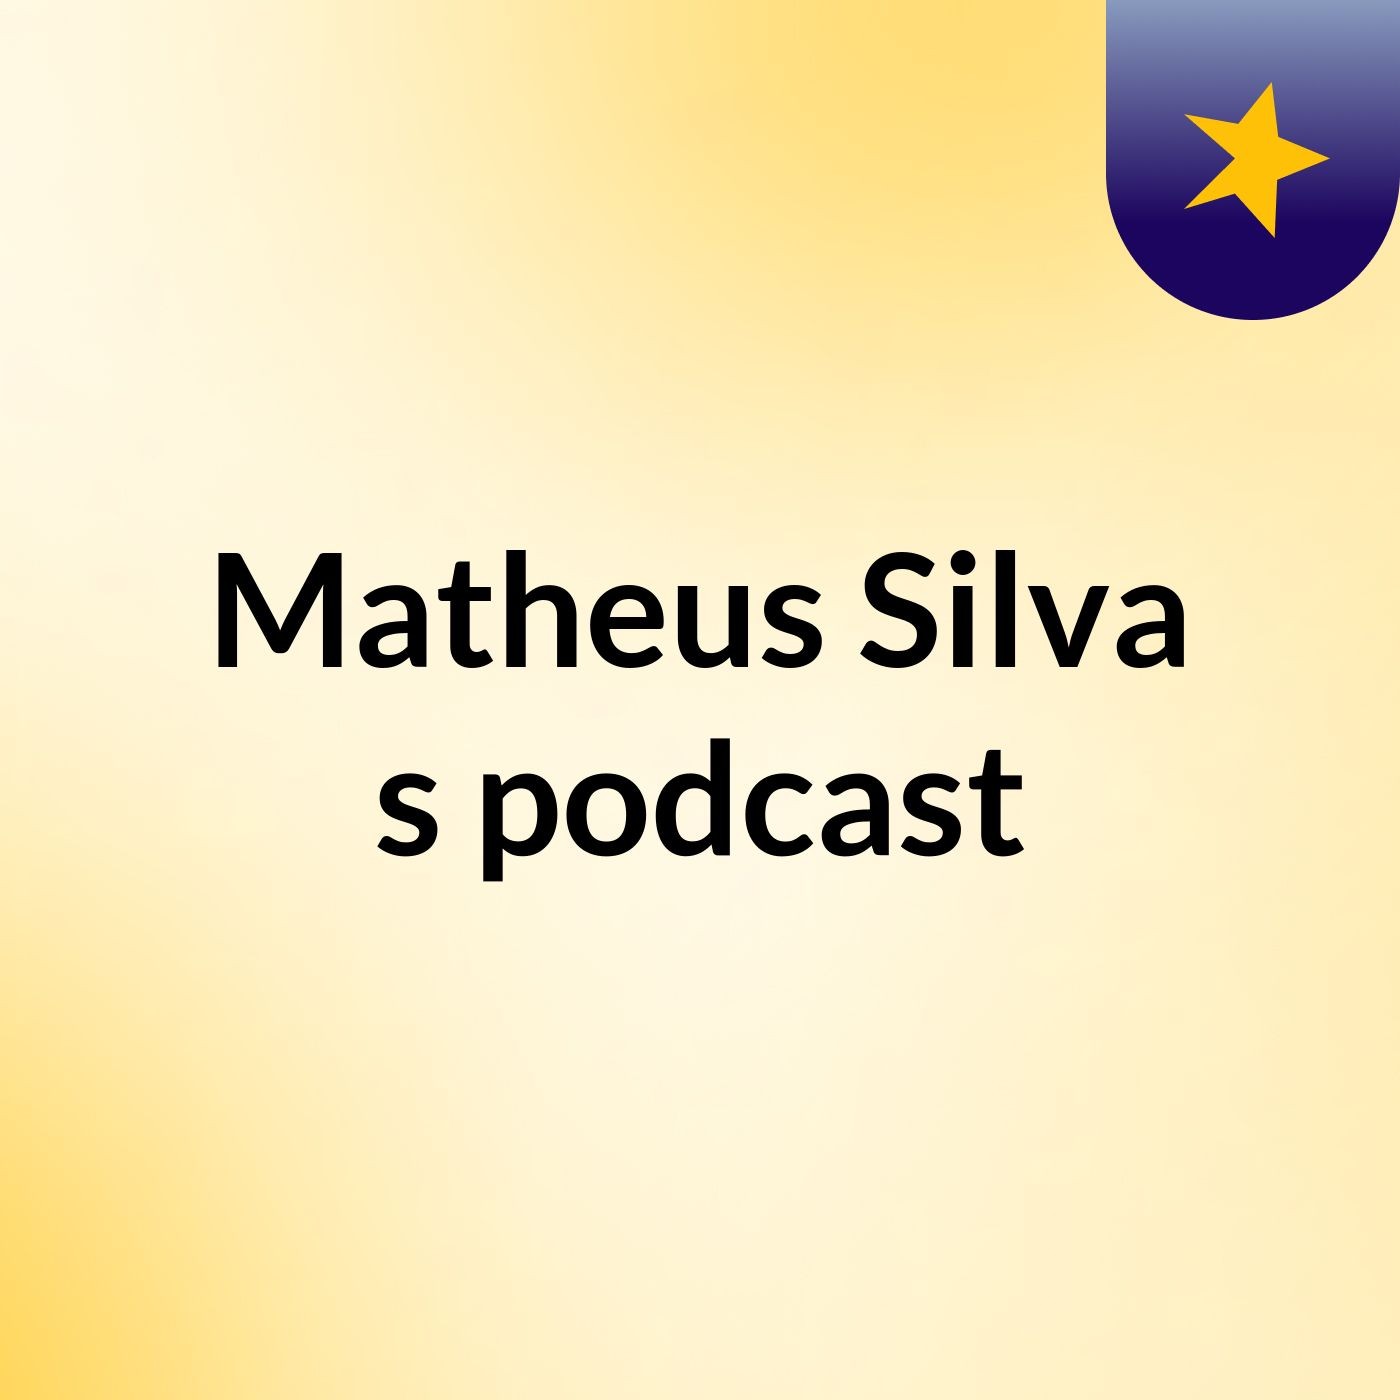 Matheus Silva's podcast